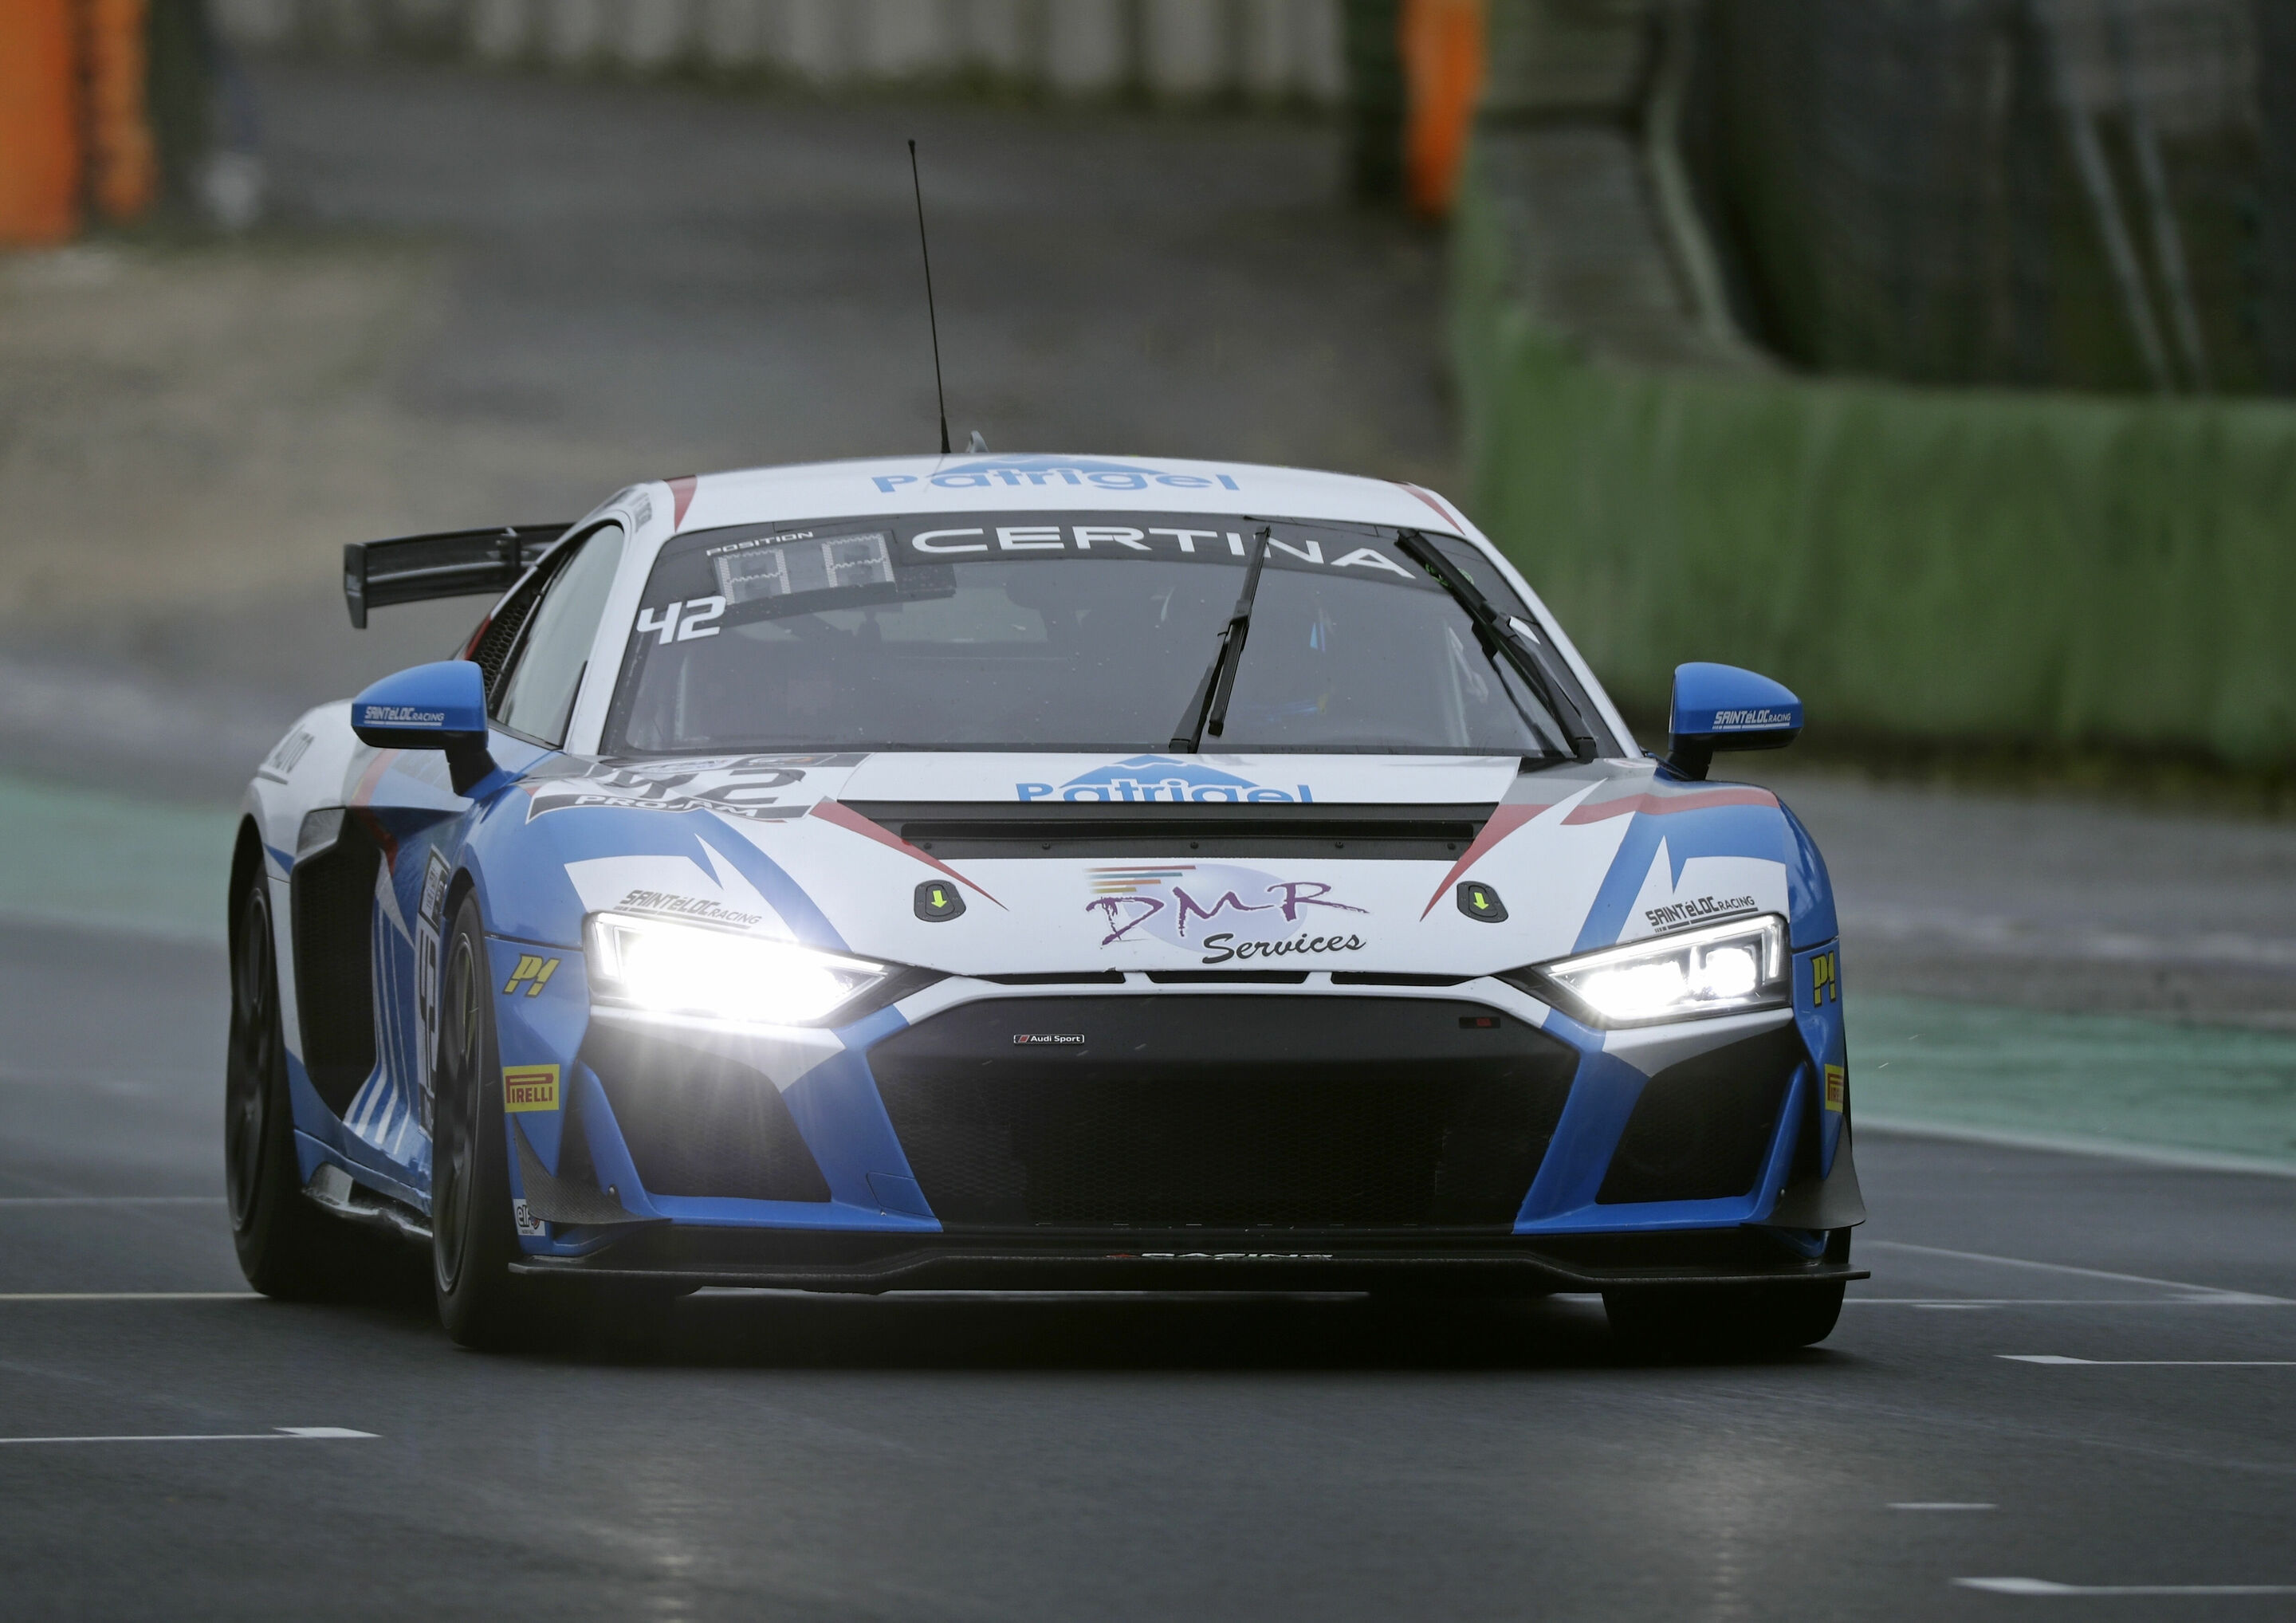 Audi Sport customer racing Vallelunga 2021 test